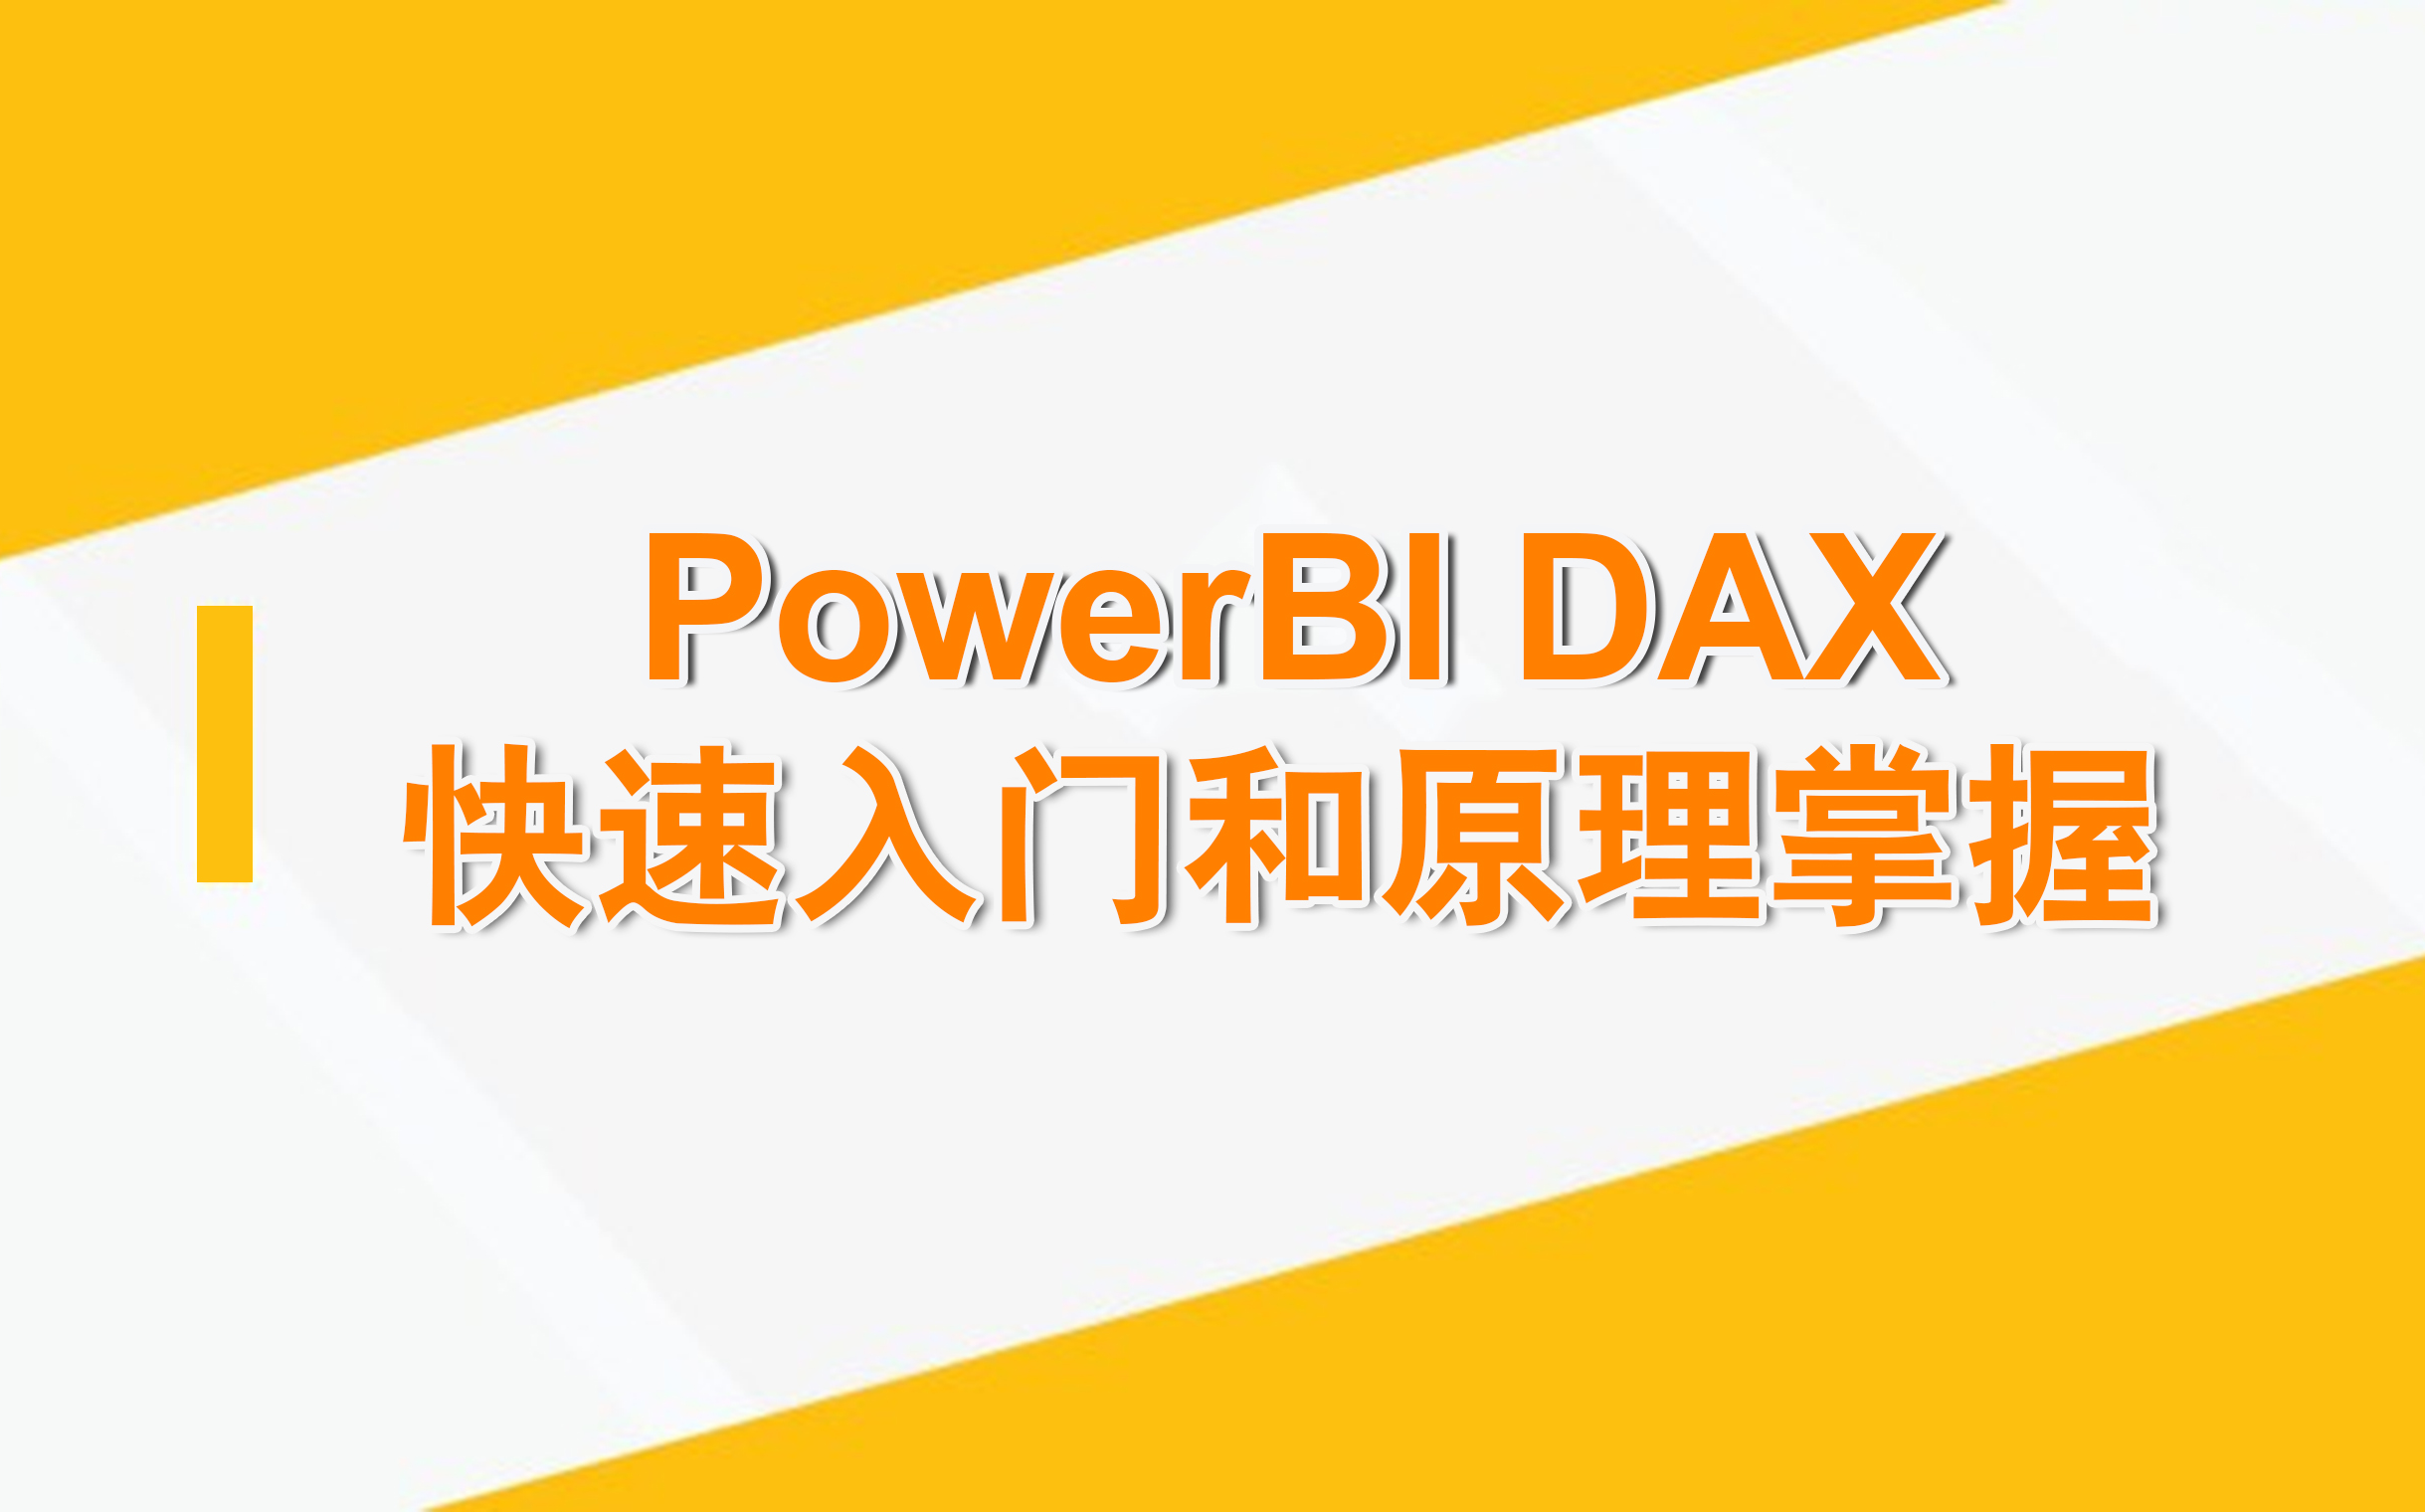 PowerBI DAX快速入门和原理掌握